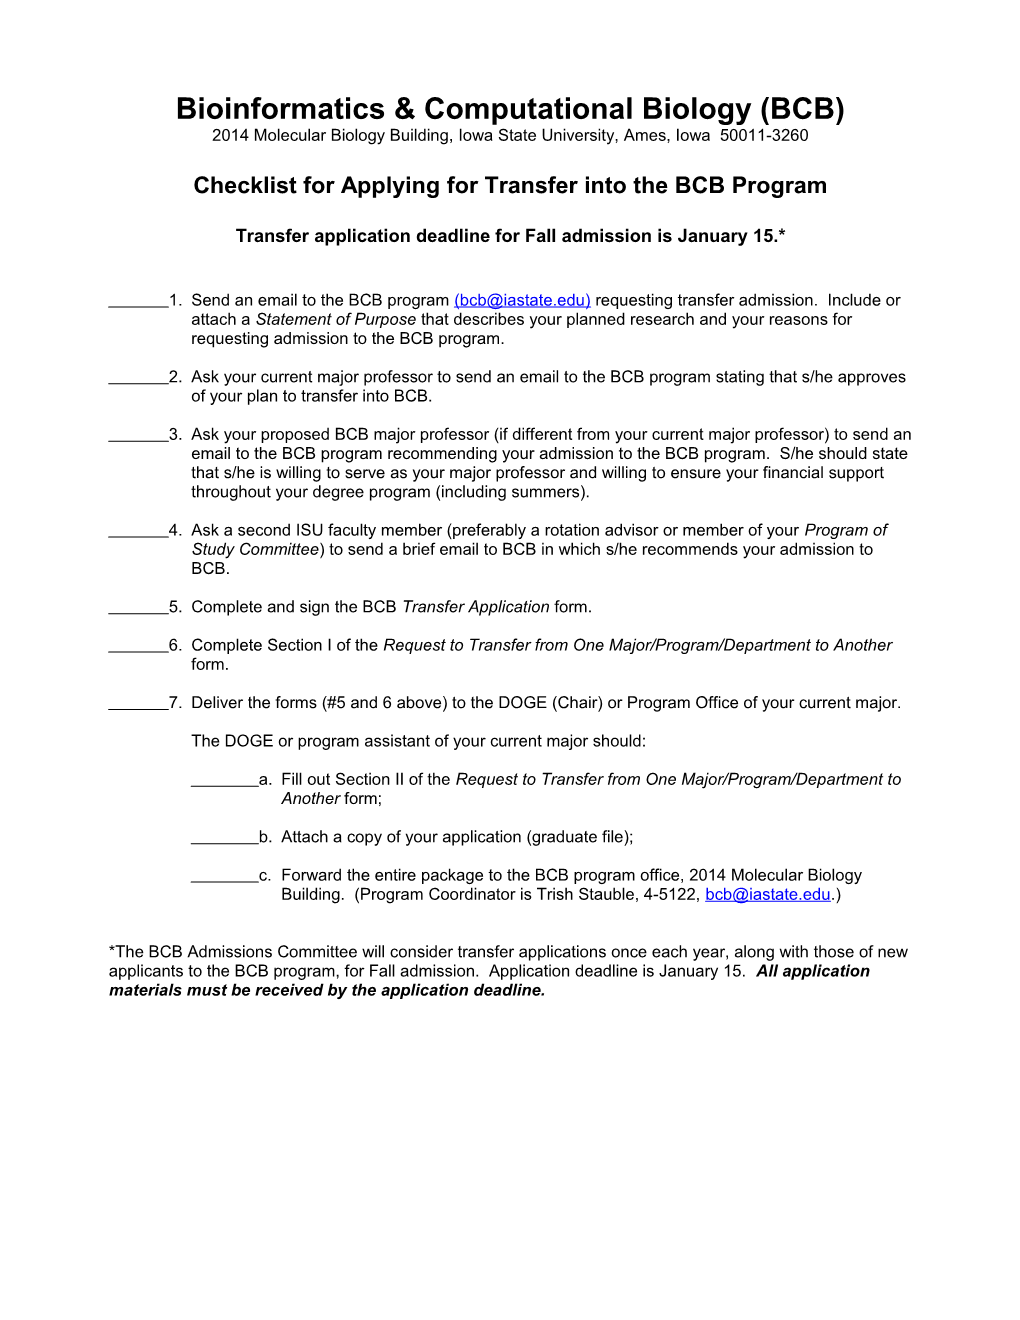 Checklist for Requesting Transfer Into the BCB Program